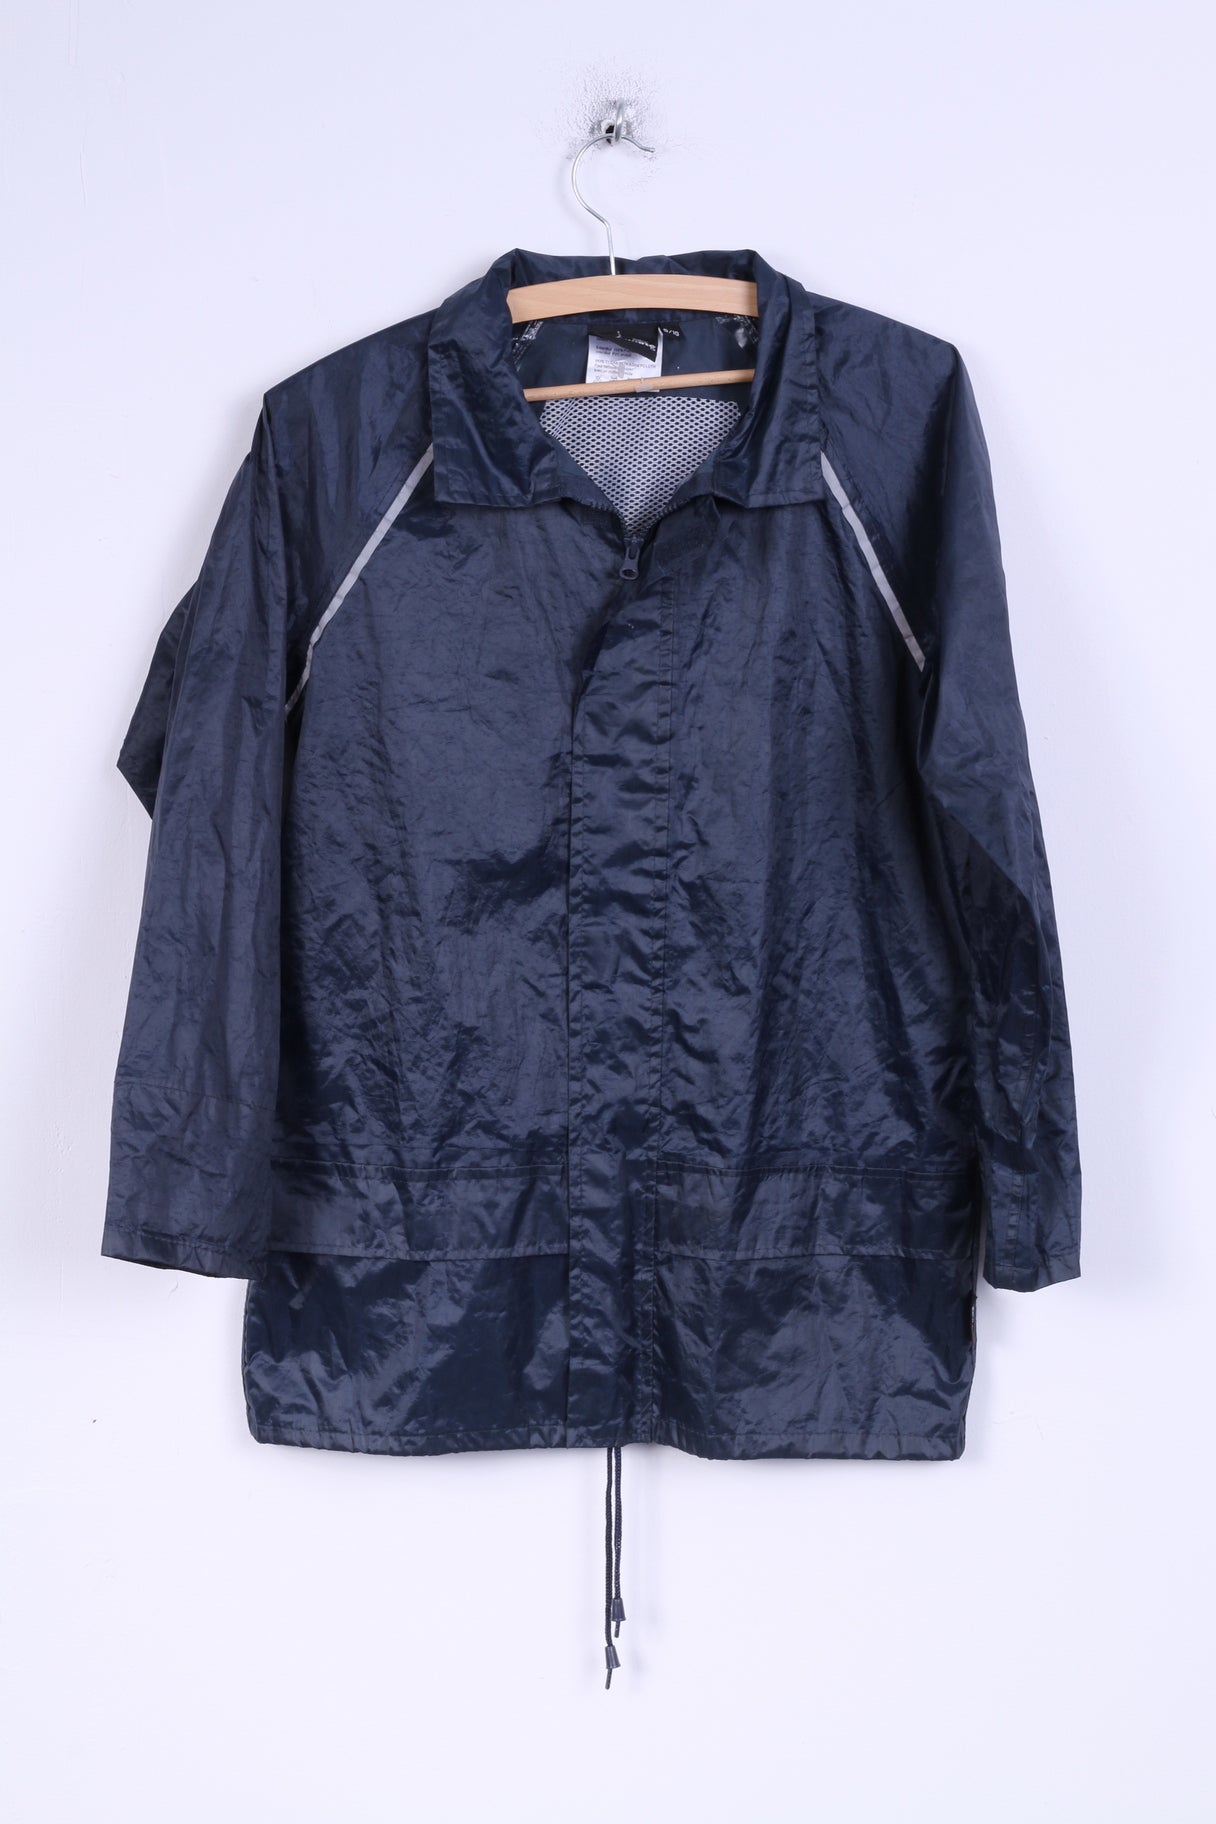 ProClimate Boys 9 / 10 Age Rain Jacket Navy Full Zipper Lightweight Top